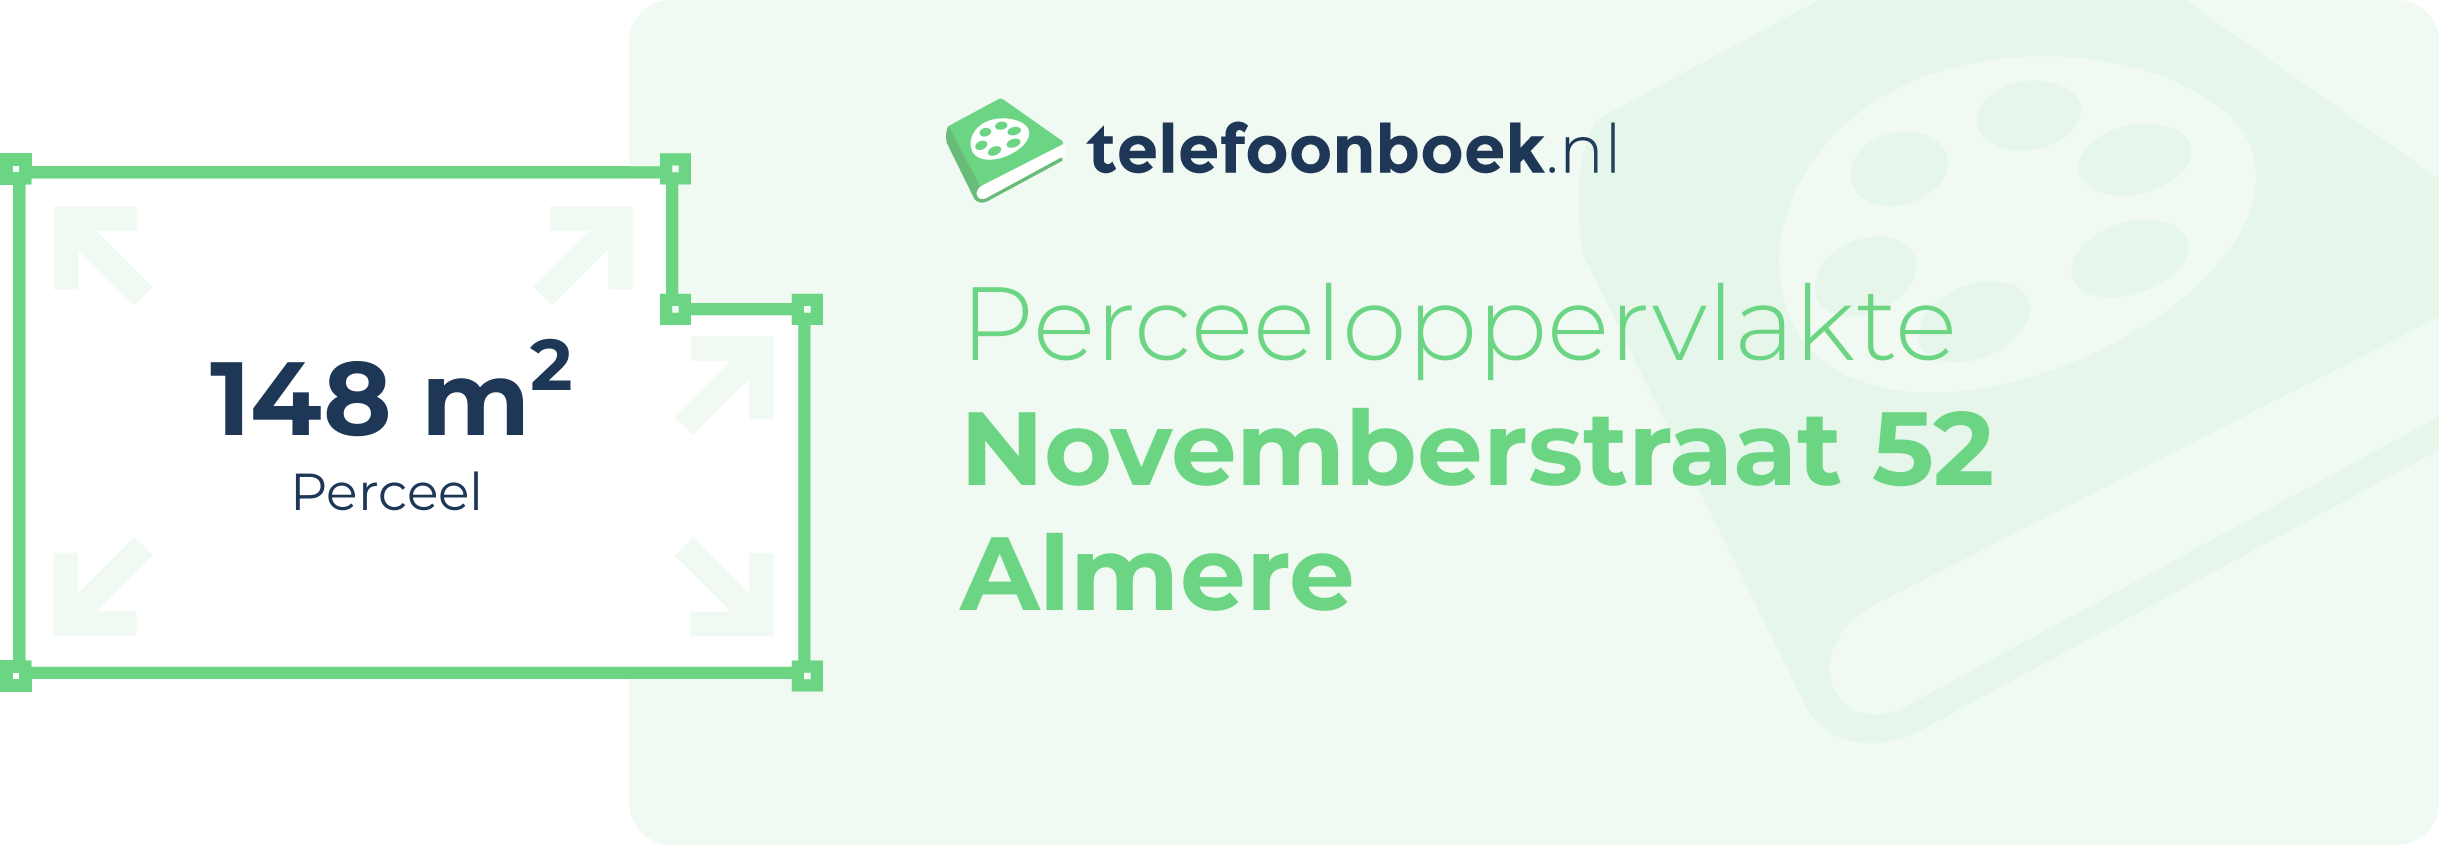 Perceeloppervlakte Novemberstraat 52 Almere